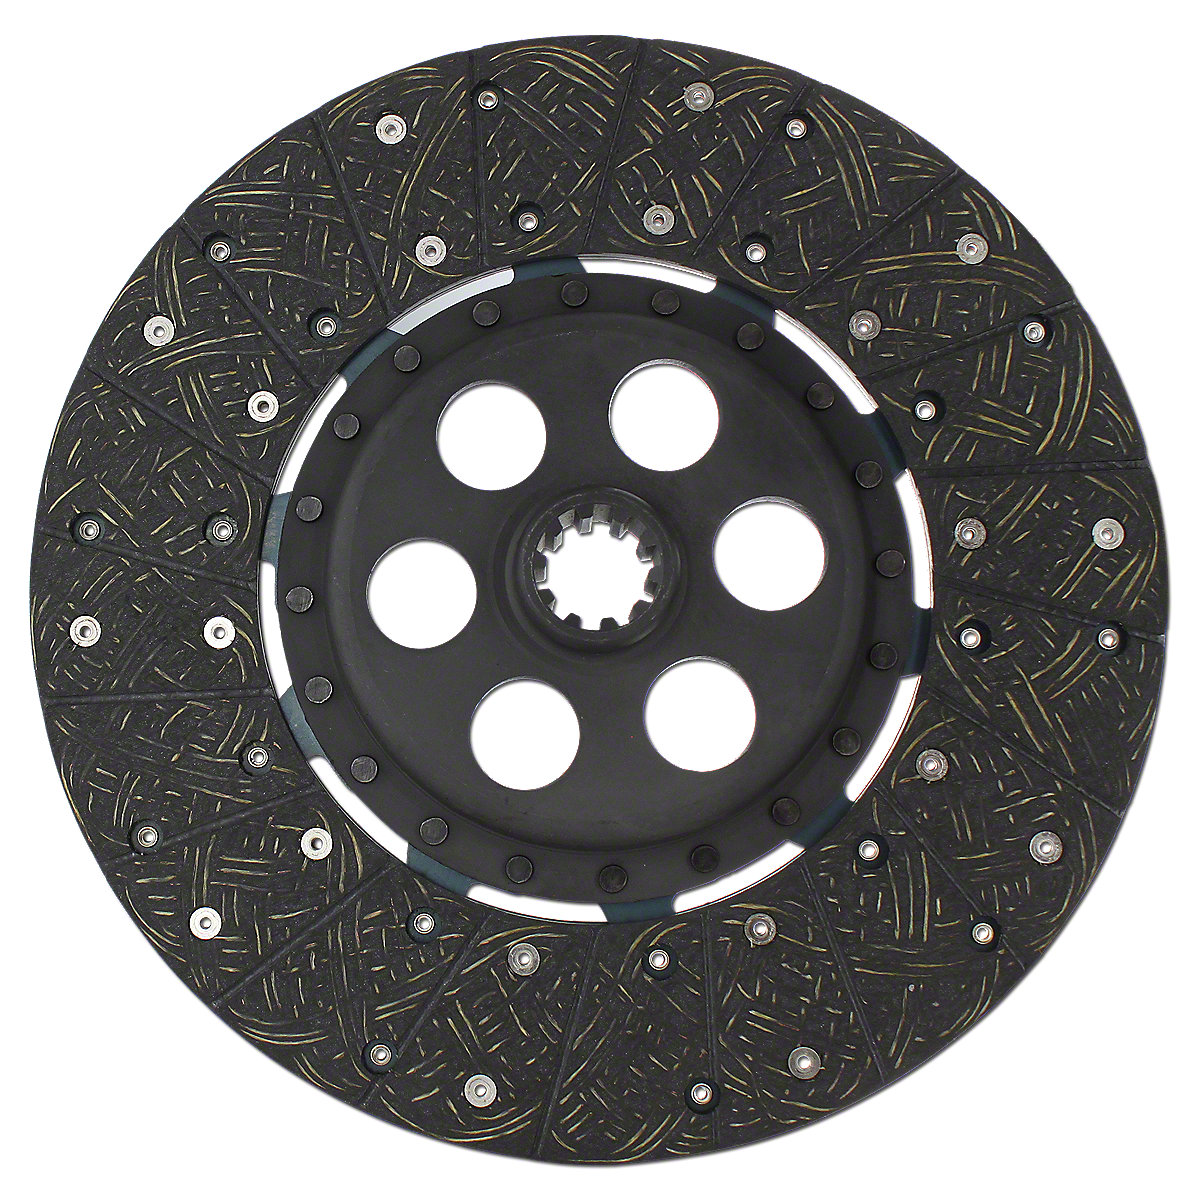 Clutch Disc For Massey Ferguson: TO35, 135, 150, 165, 175, 180, 2200, 230, 235, 245, 255, 265, 3165, 65, 35, 50.